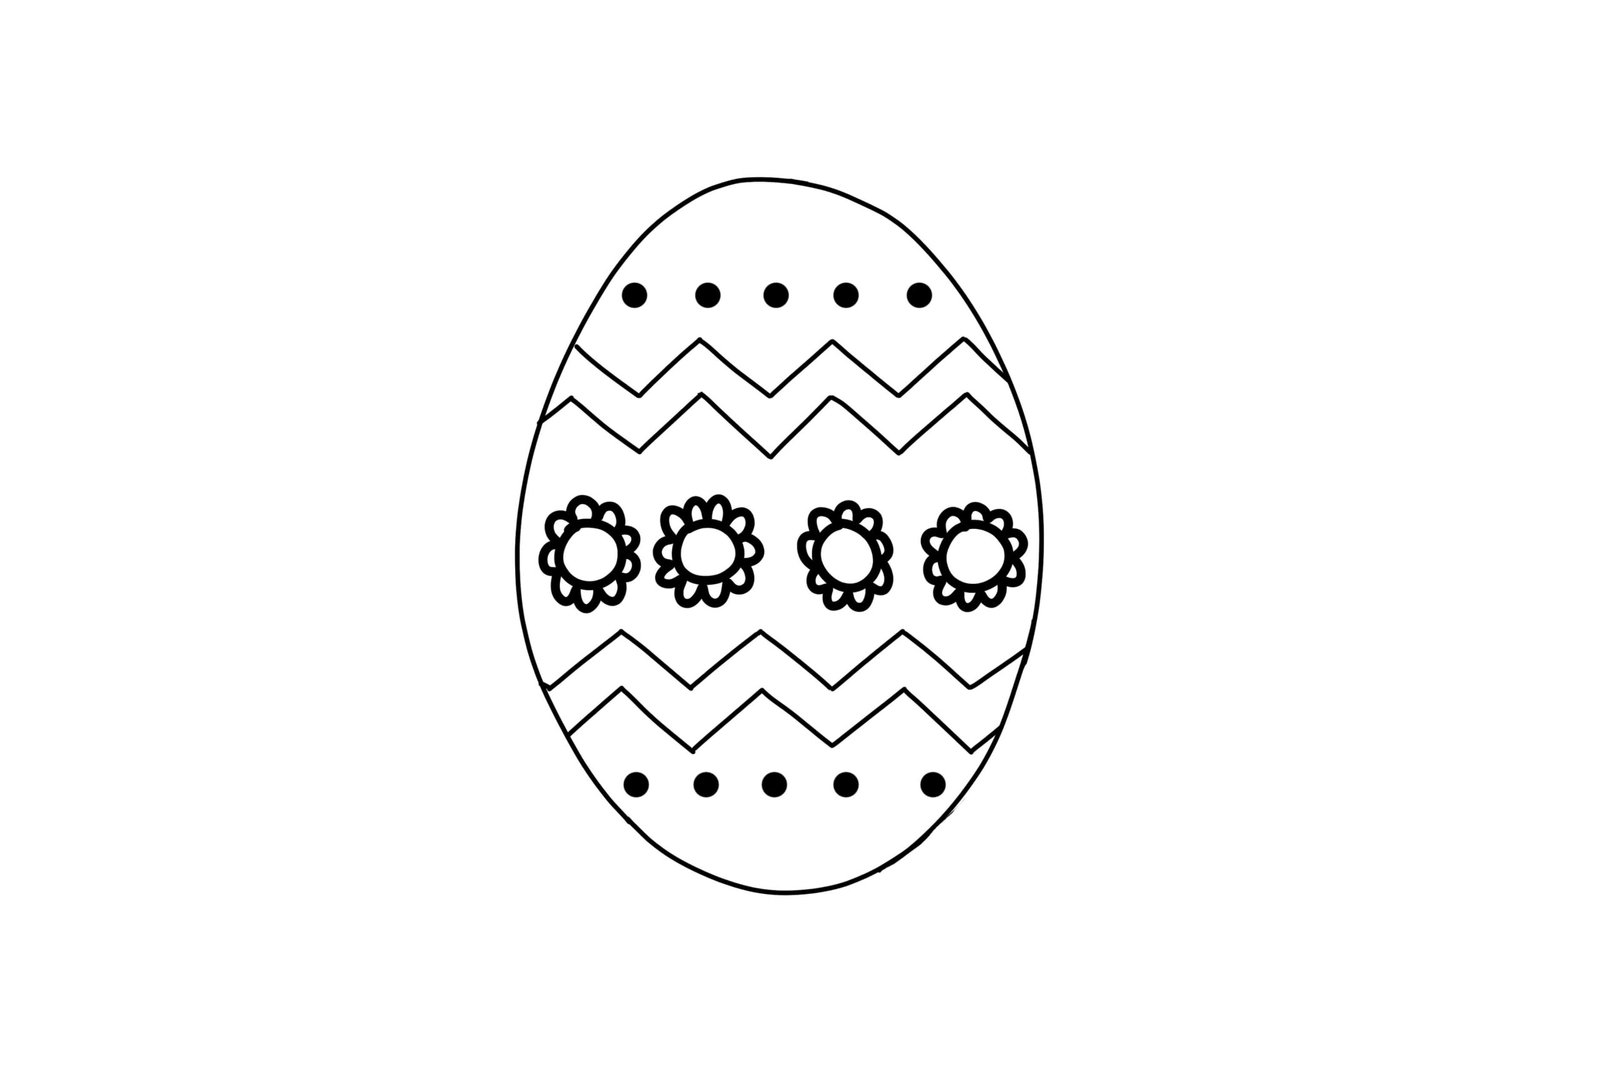 Easter Egg Hunt Coloring Page